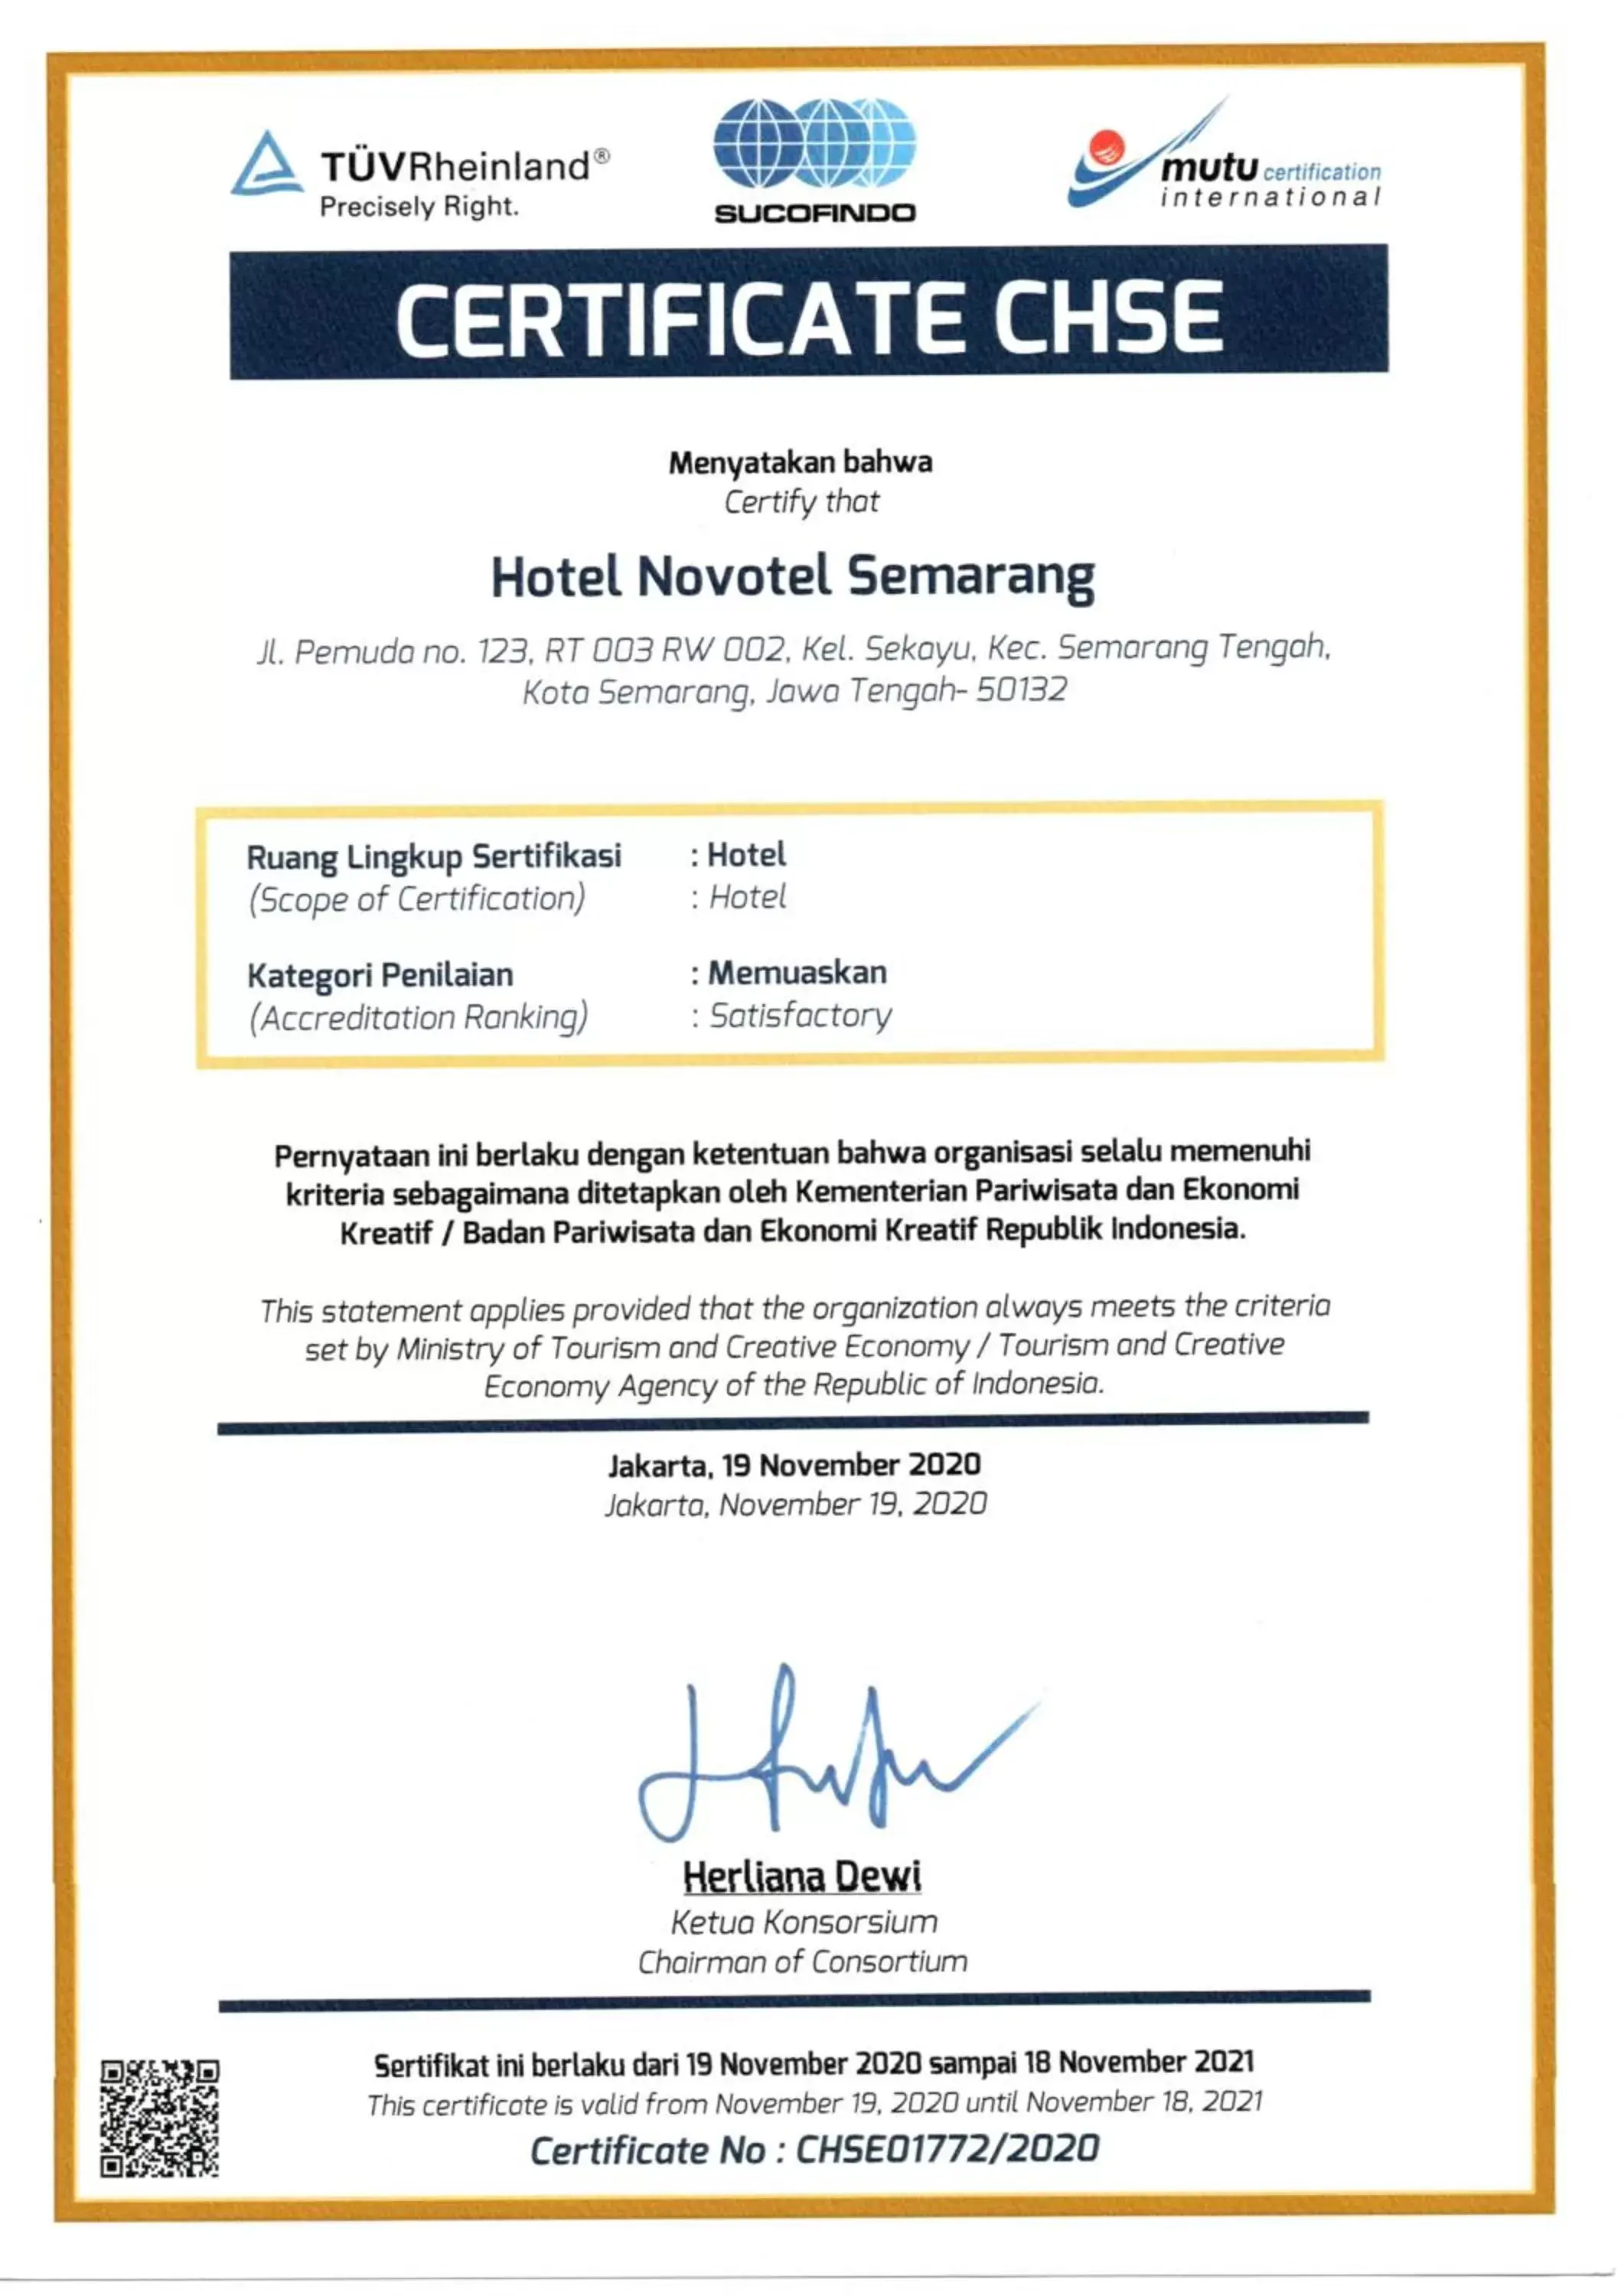 Logo/Certificate/Sign in Novotel Semarang - GeNose Ready, CHSE Certified